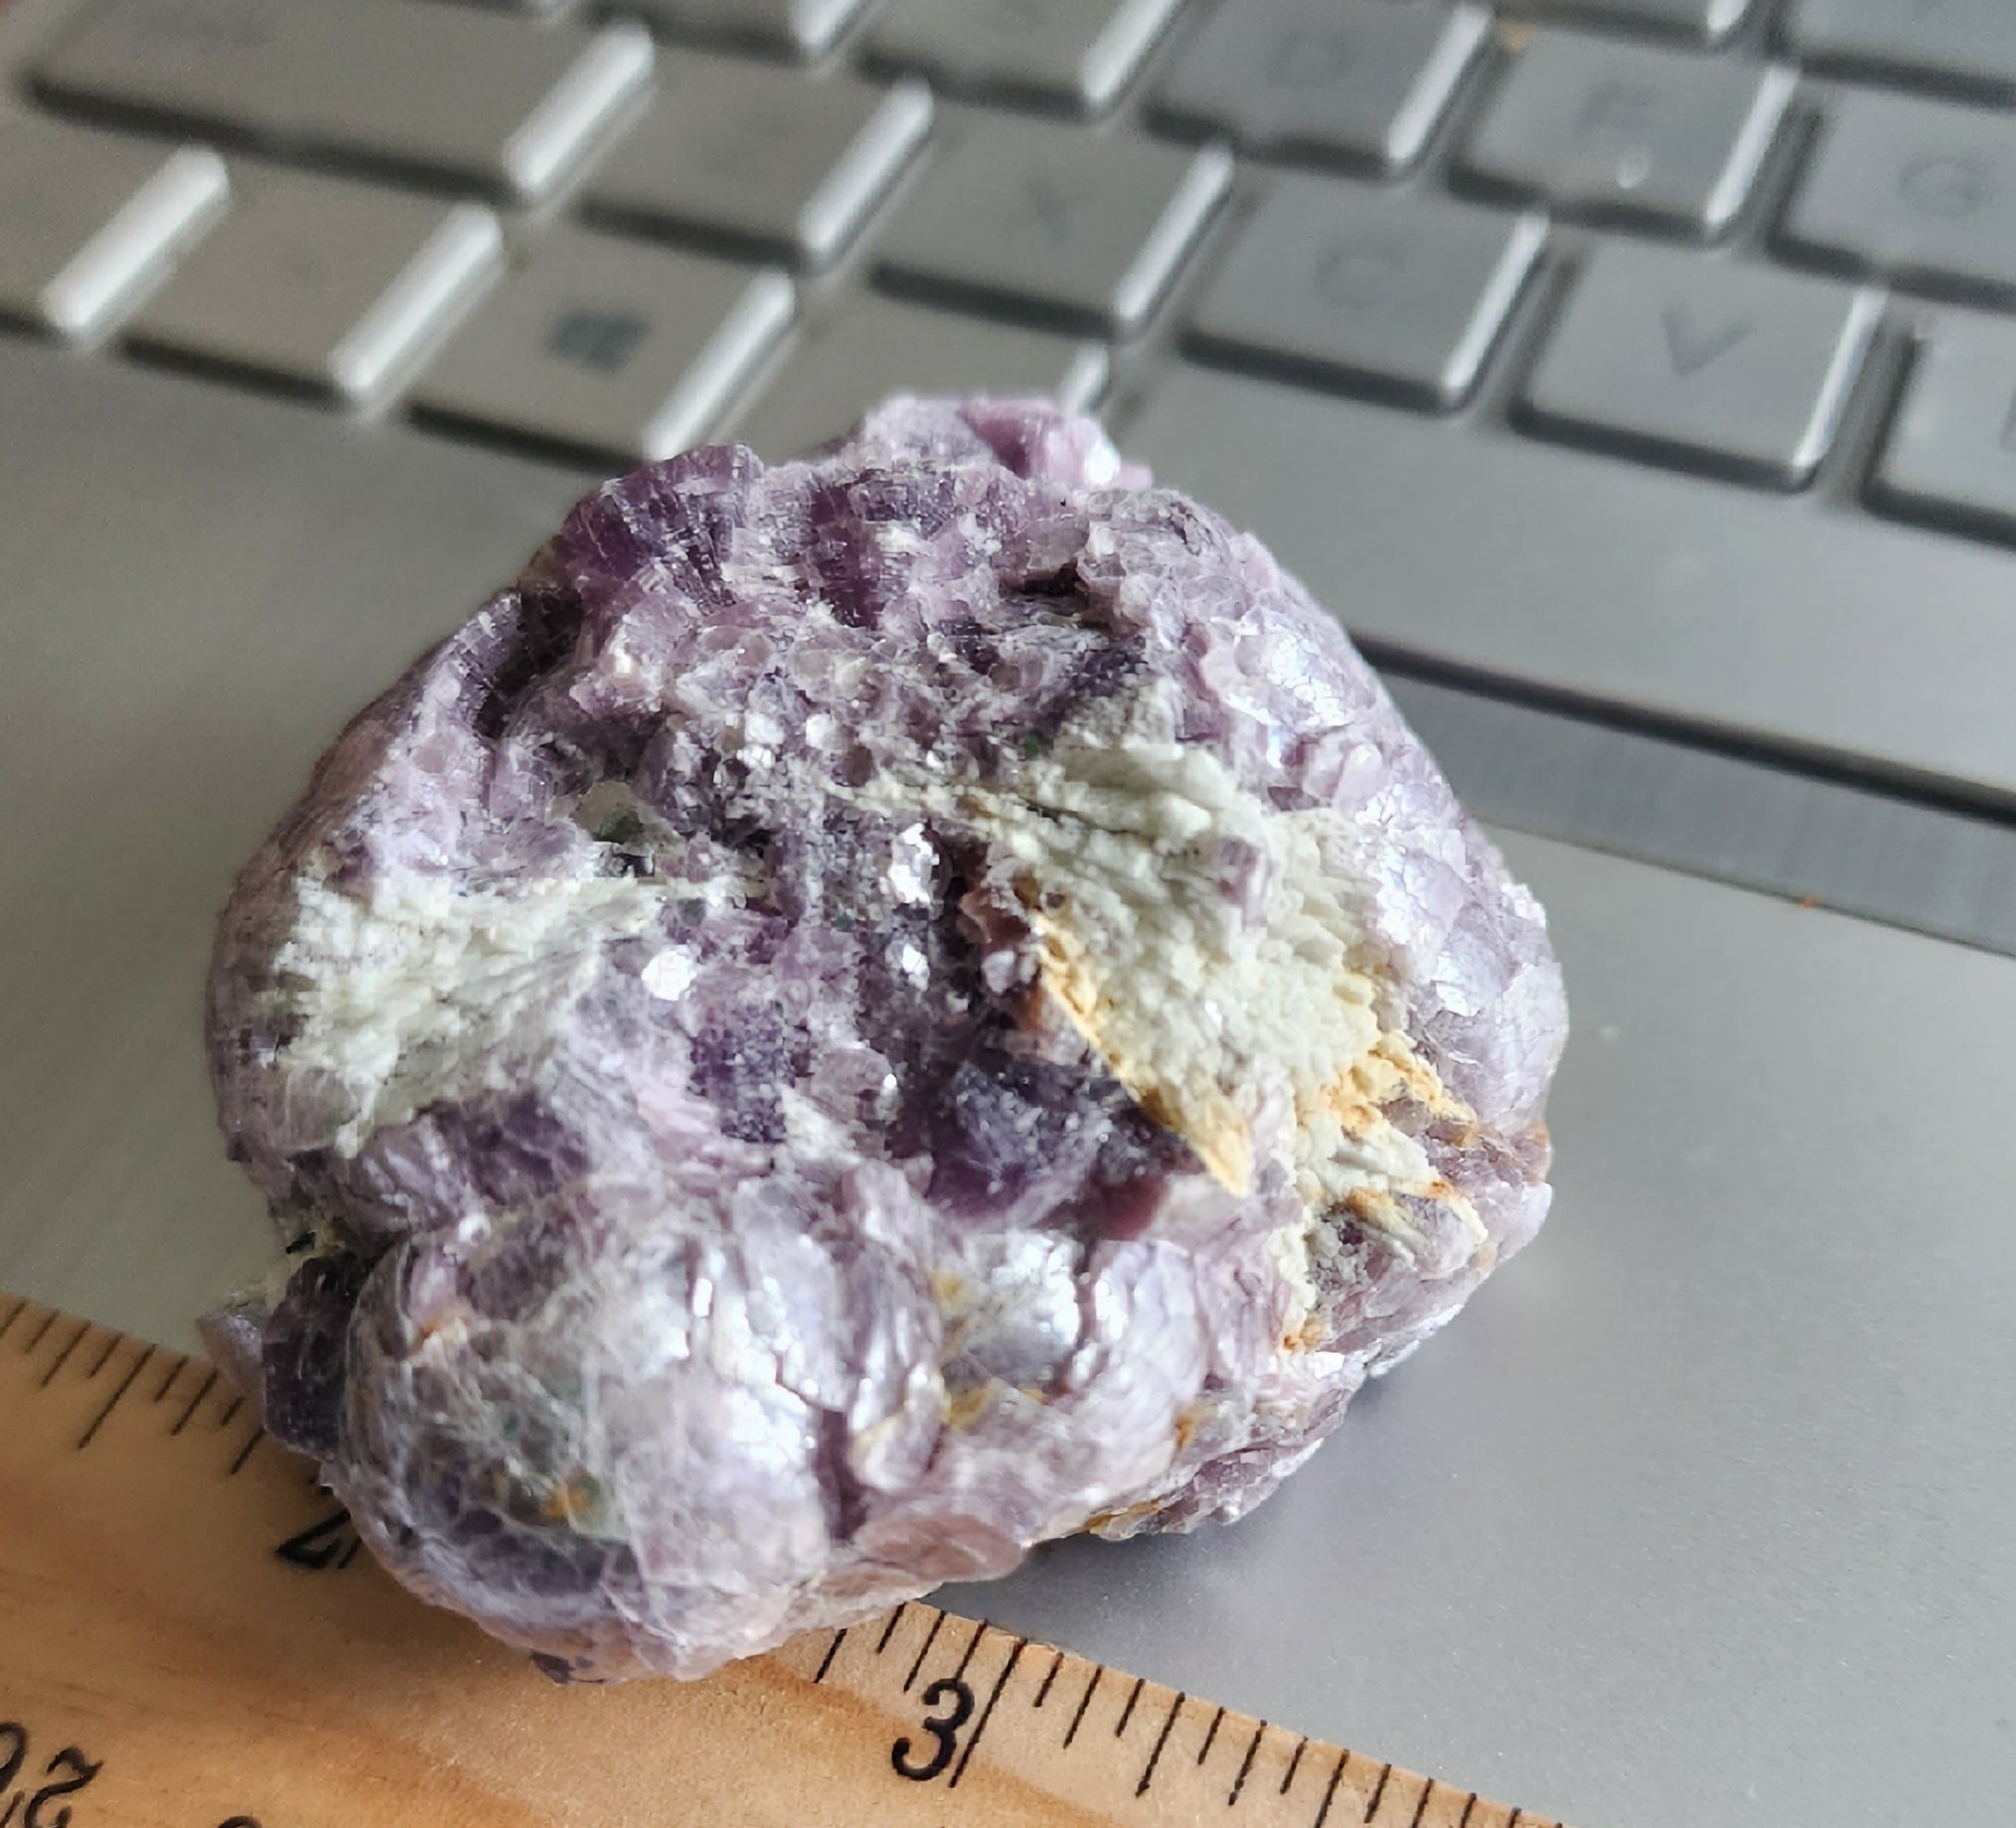 Botryoidal Lepidolite Medium-Sized Mineral Specimen